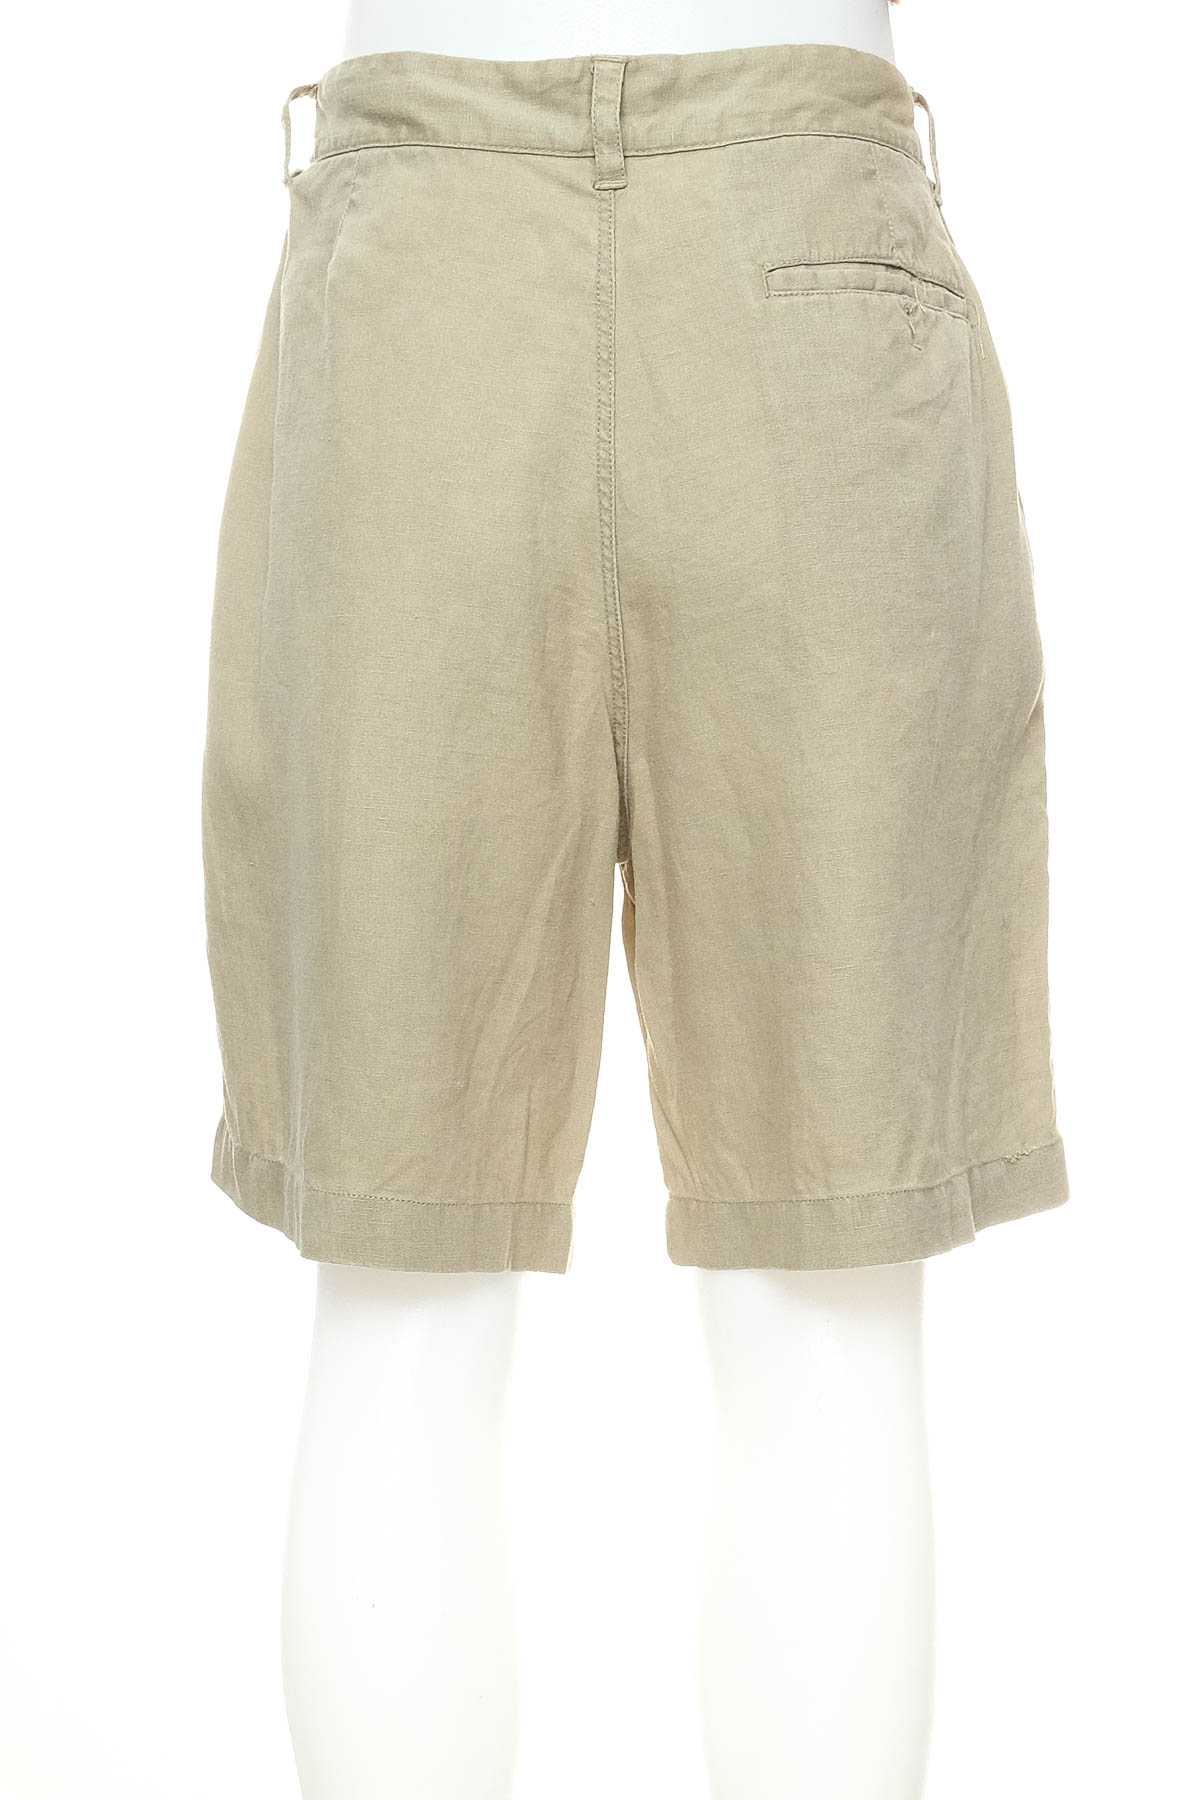 Men's shorts - Boden - 1